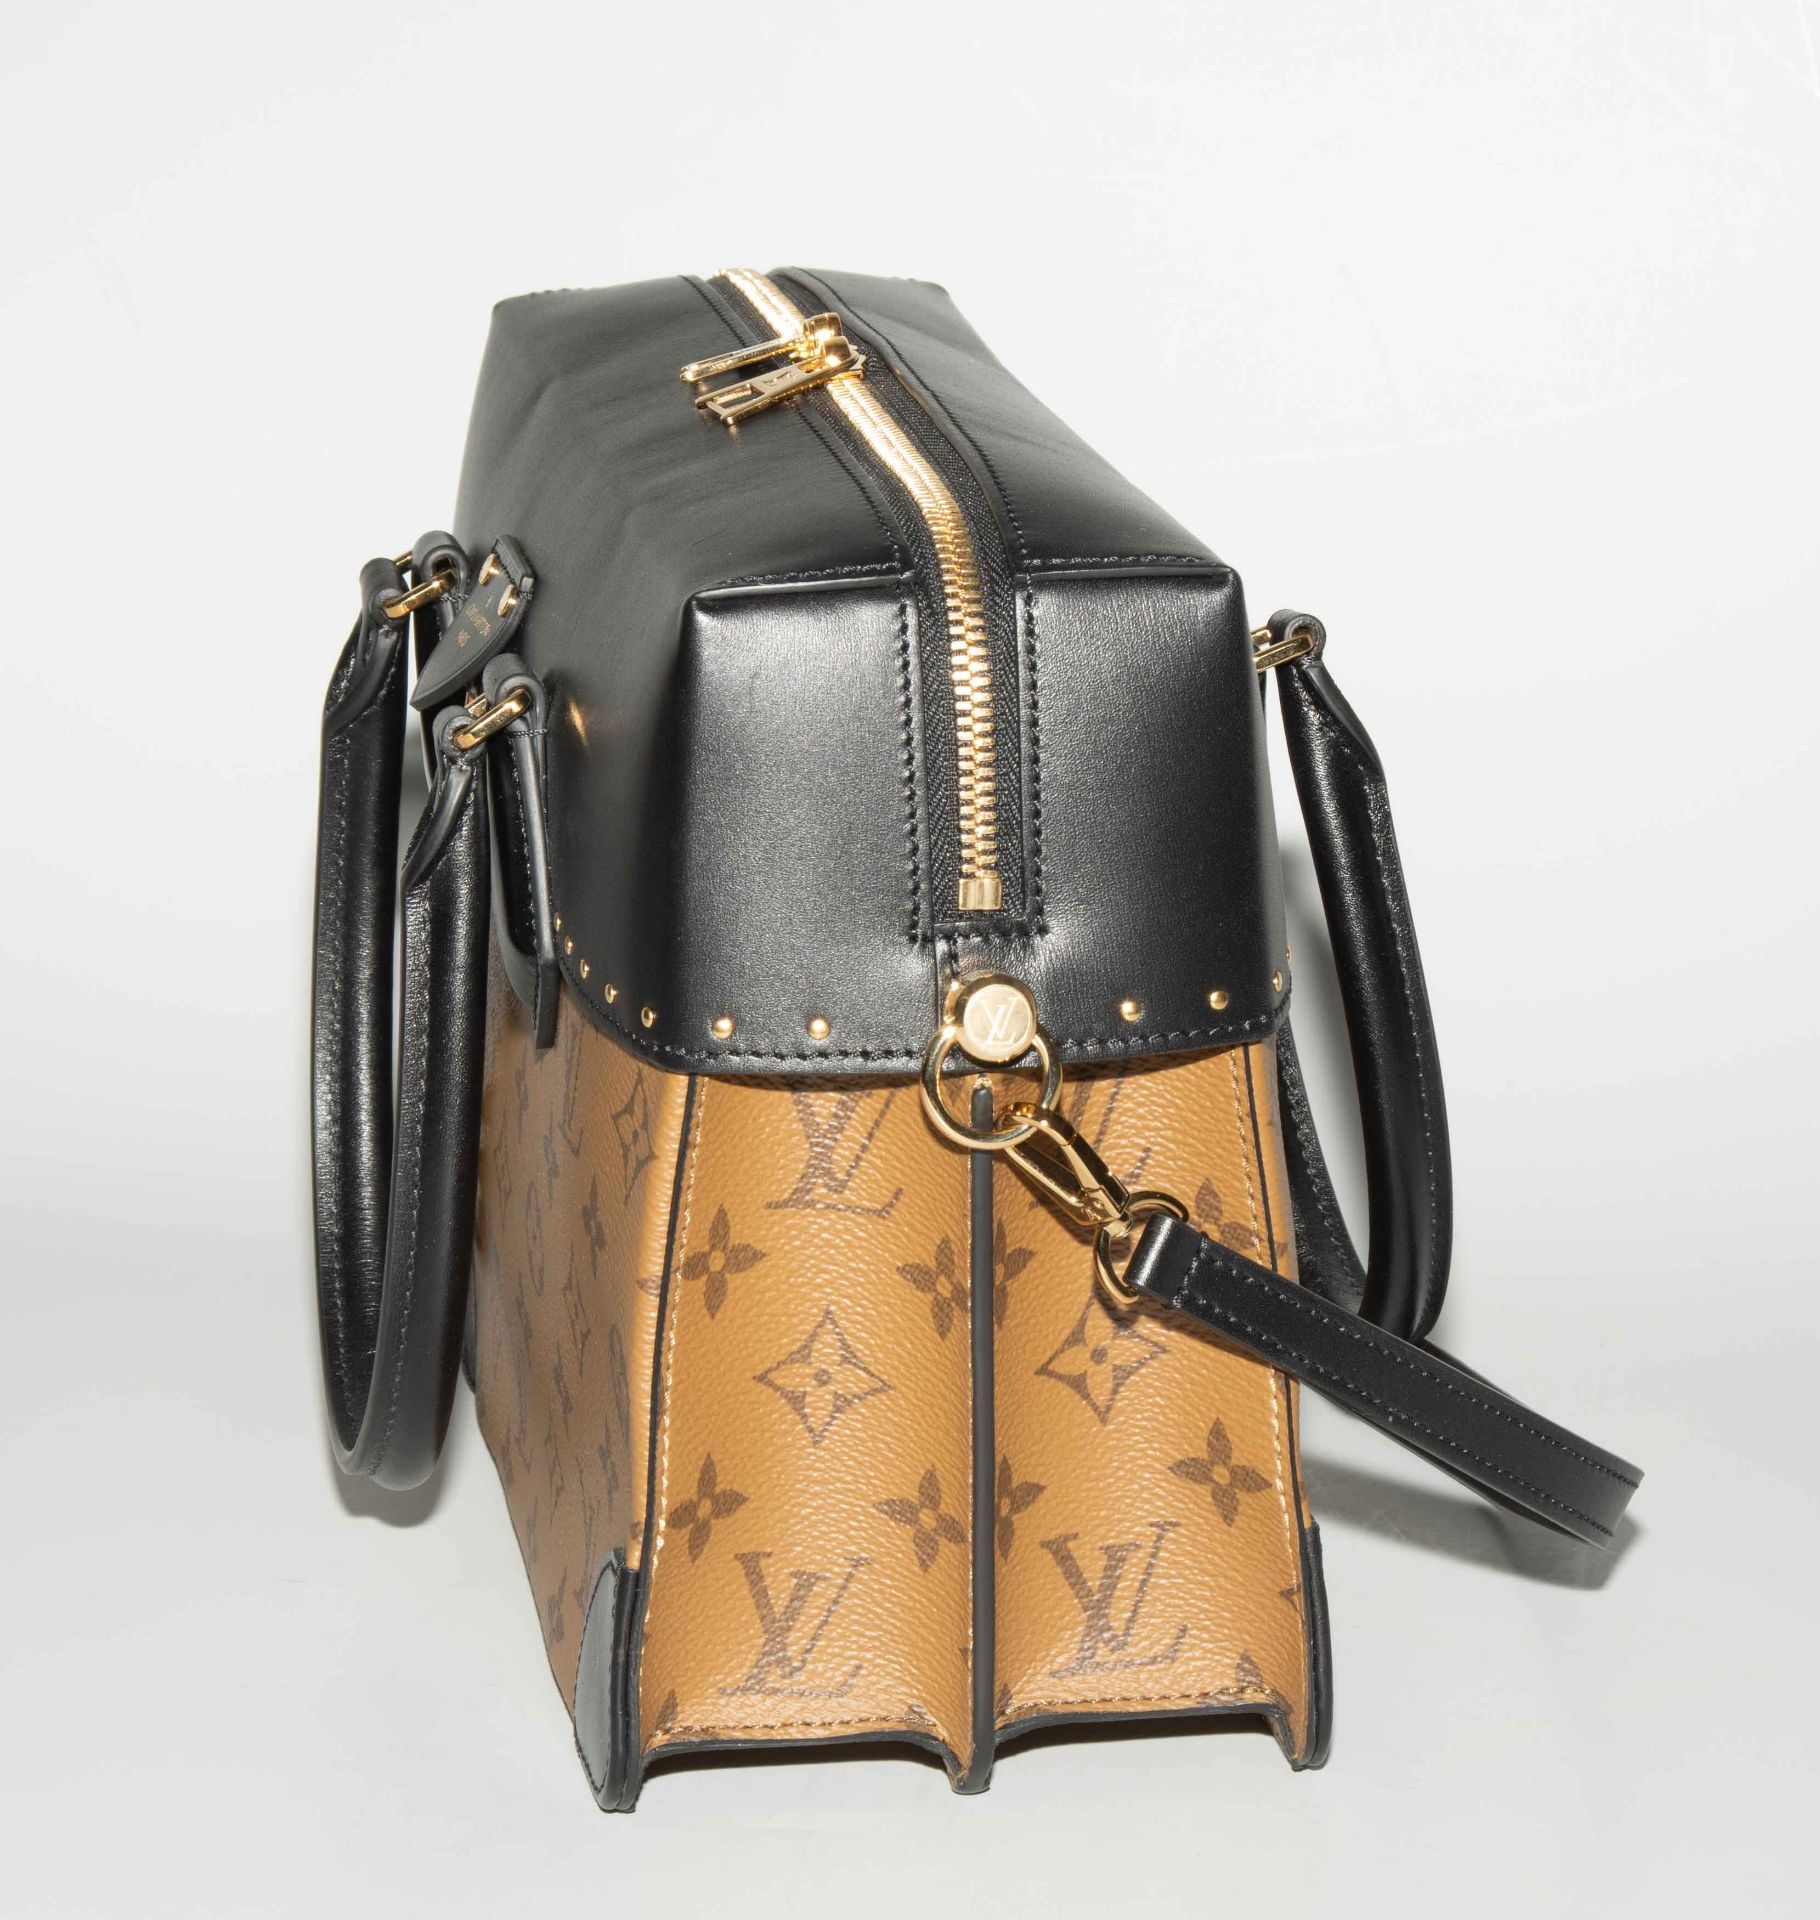 Louis Vuitton, Handtasche "City Malle" - Image 4 of 14